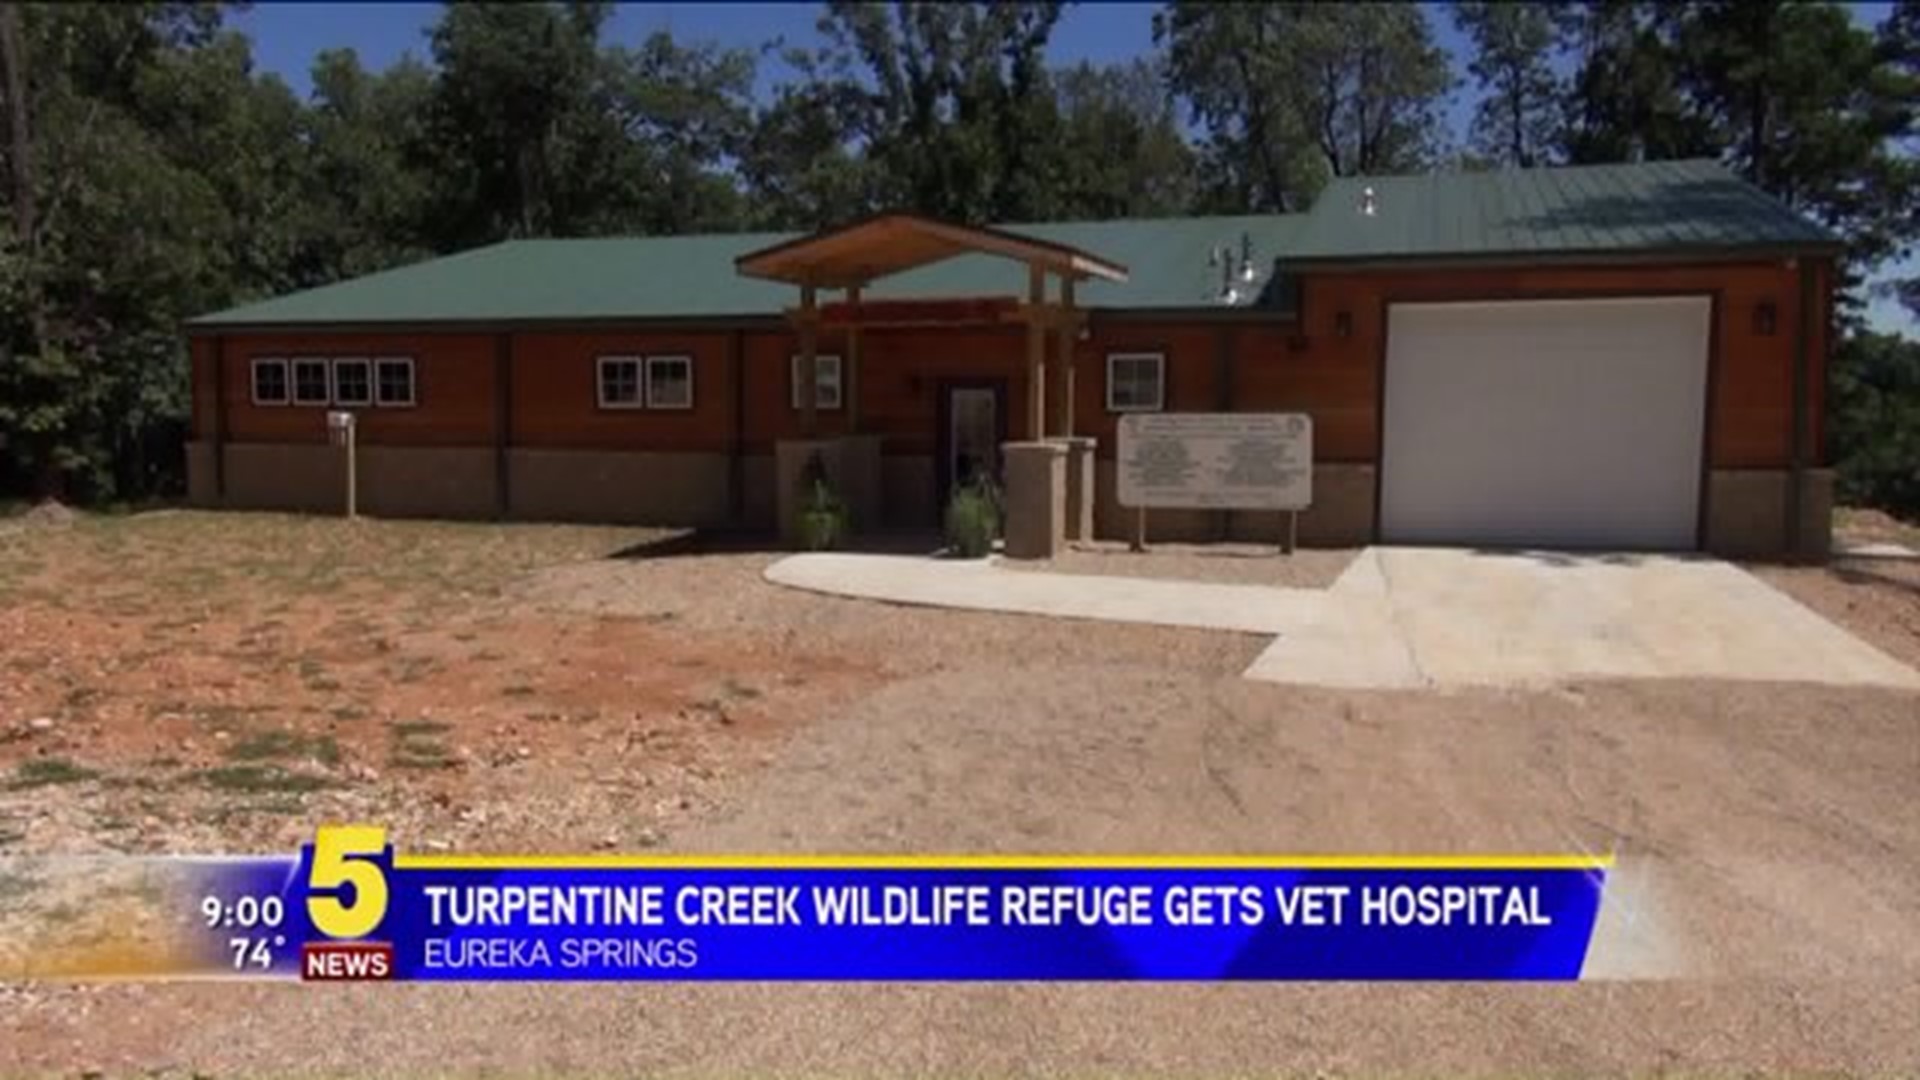 TURPENTINE CREEK WILDLIFE REFUGE GETS VET HOSPITAL